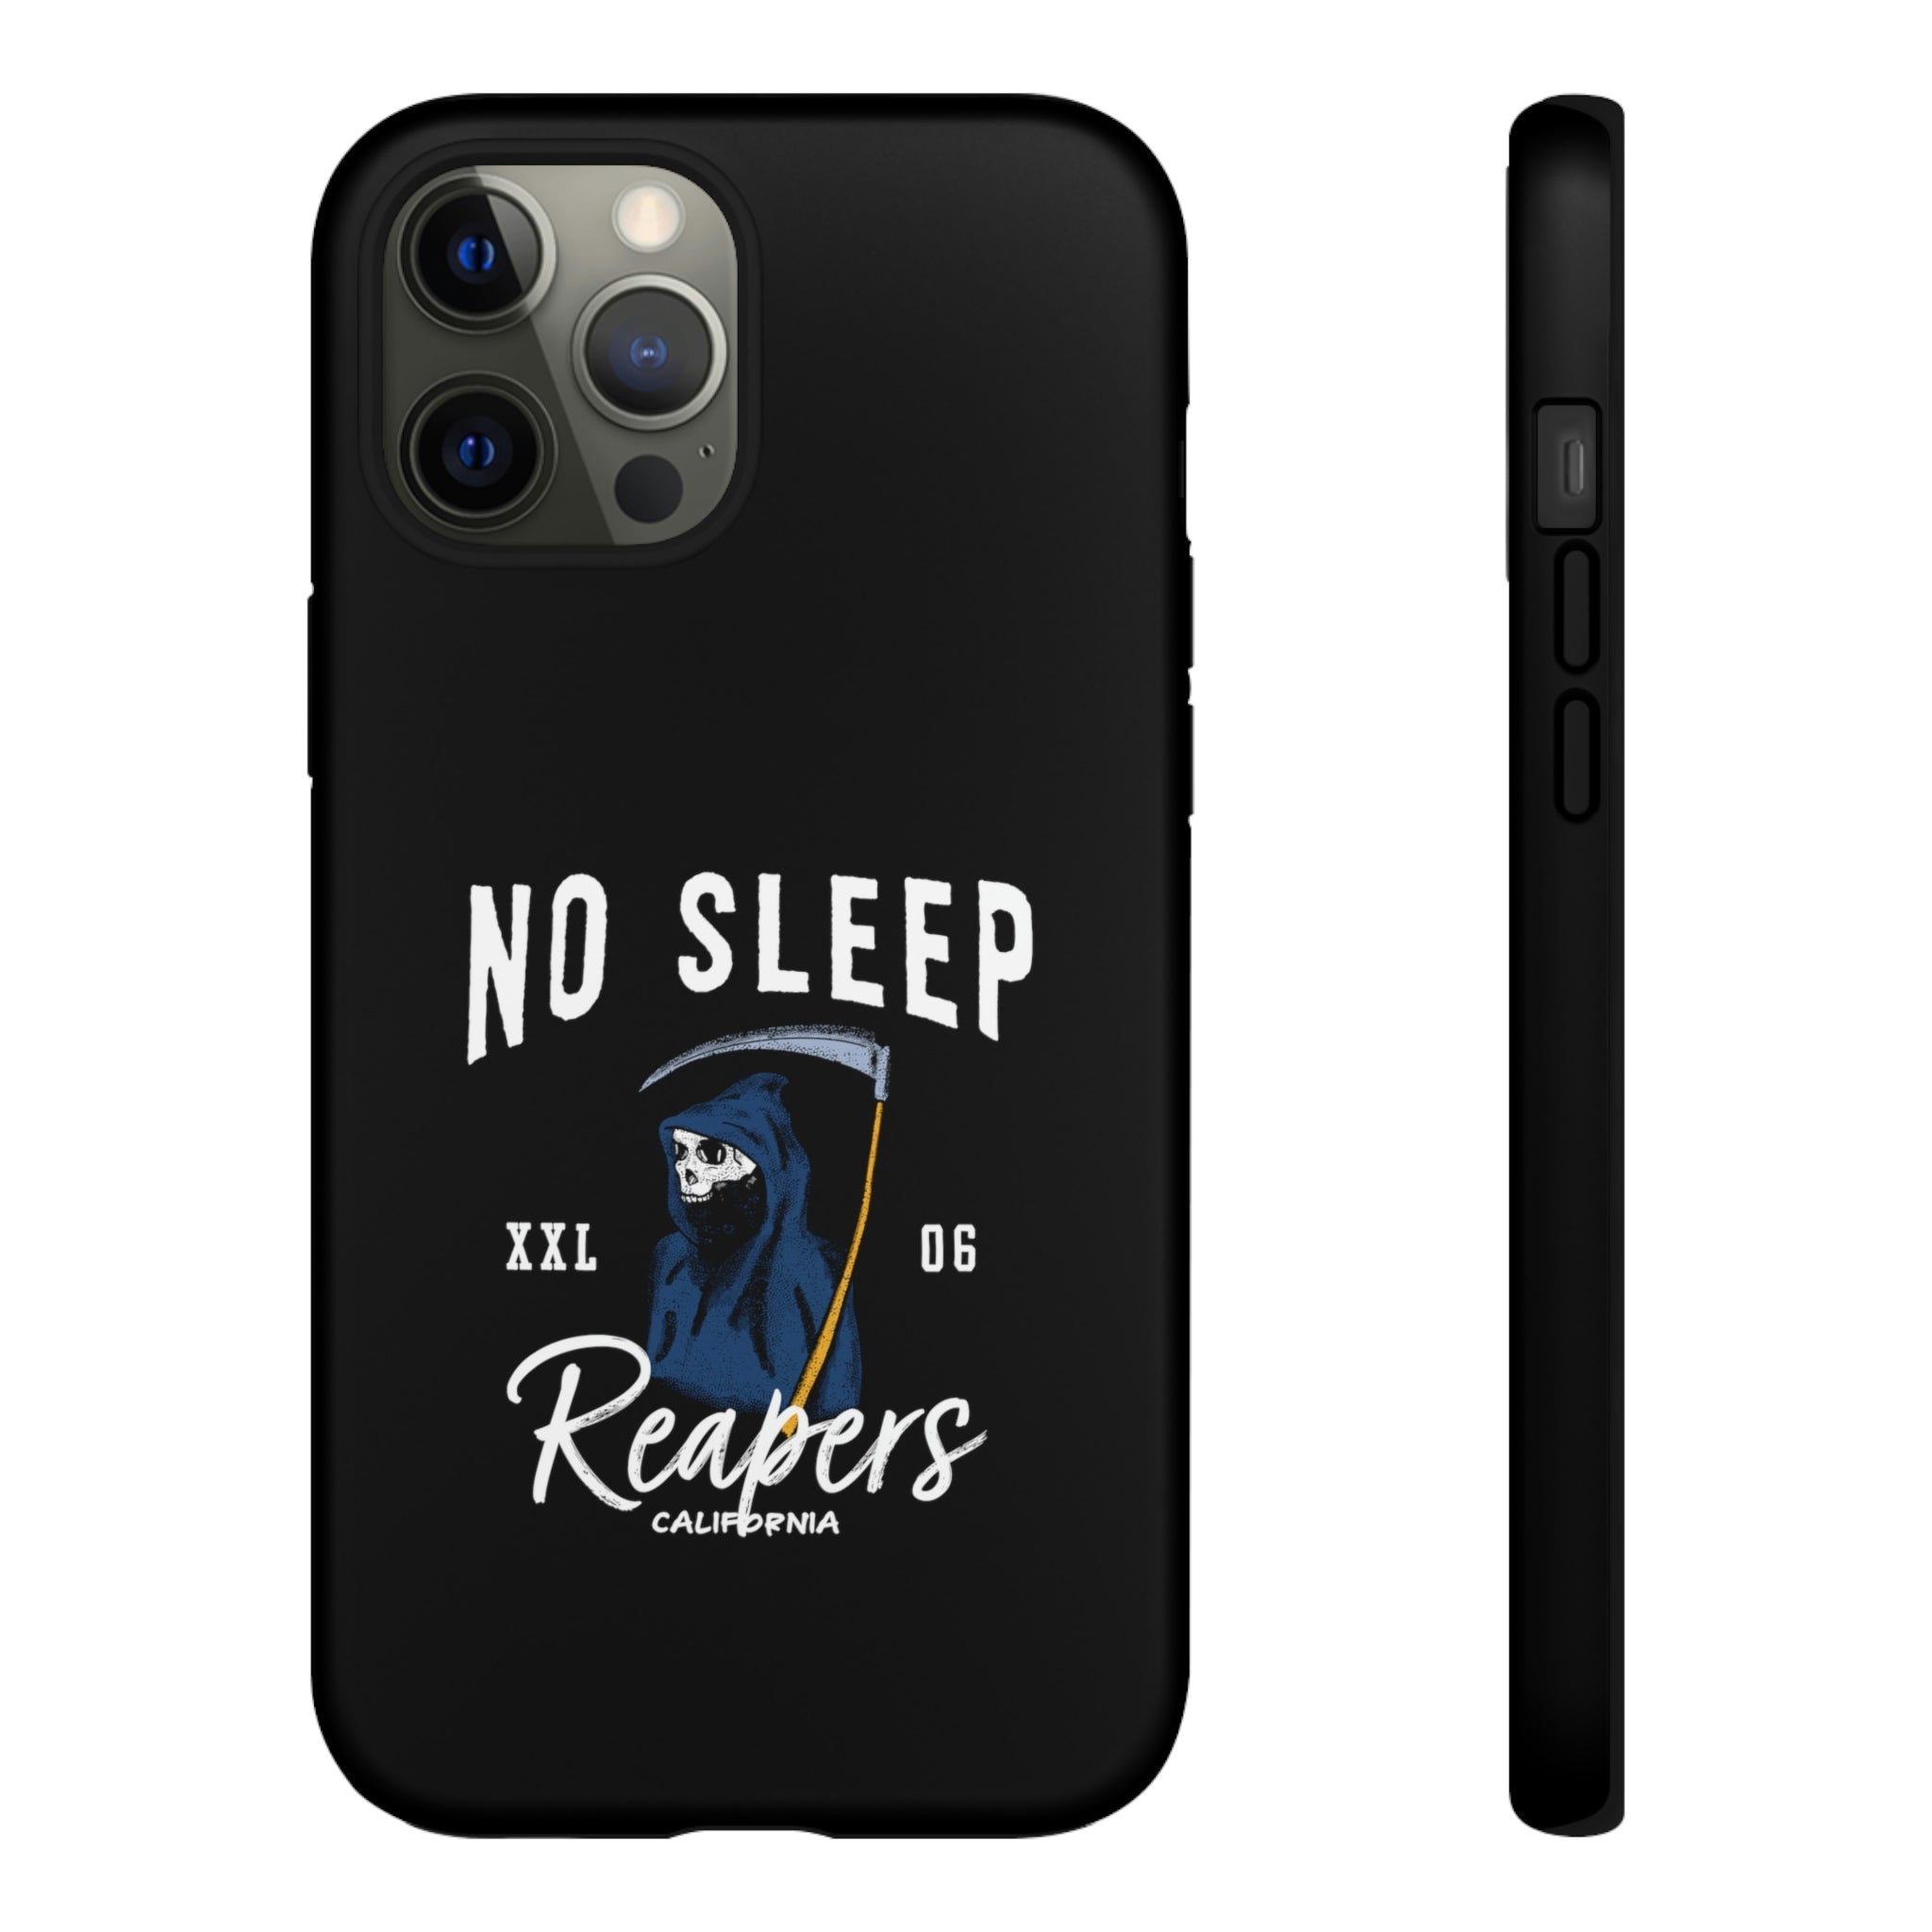 Reapers iPhone Case - NO SLEEP RECORDS - NO SLEEP RECORDS